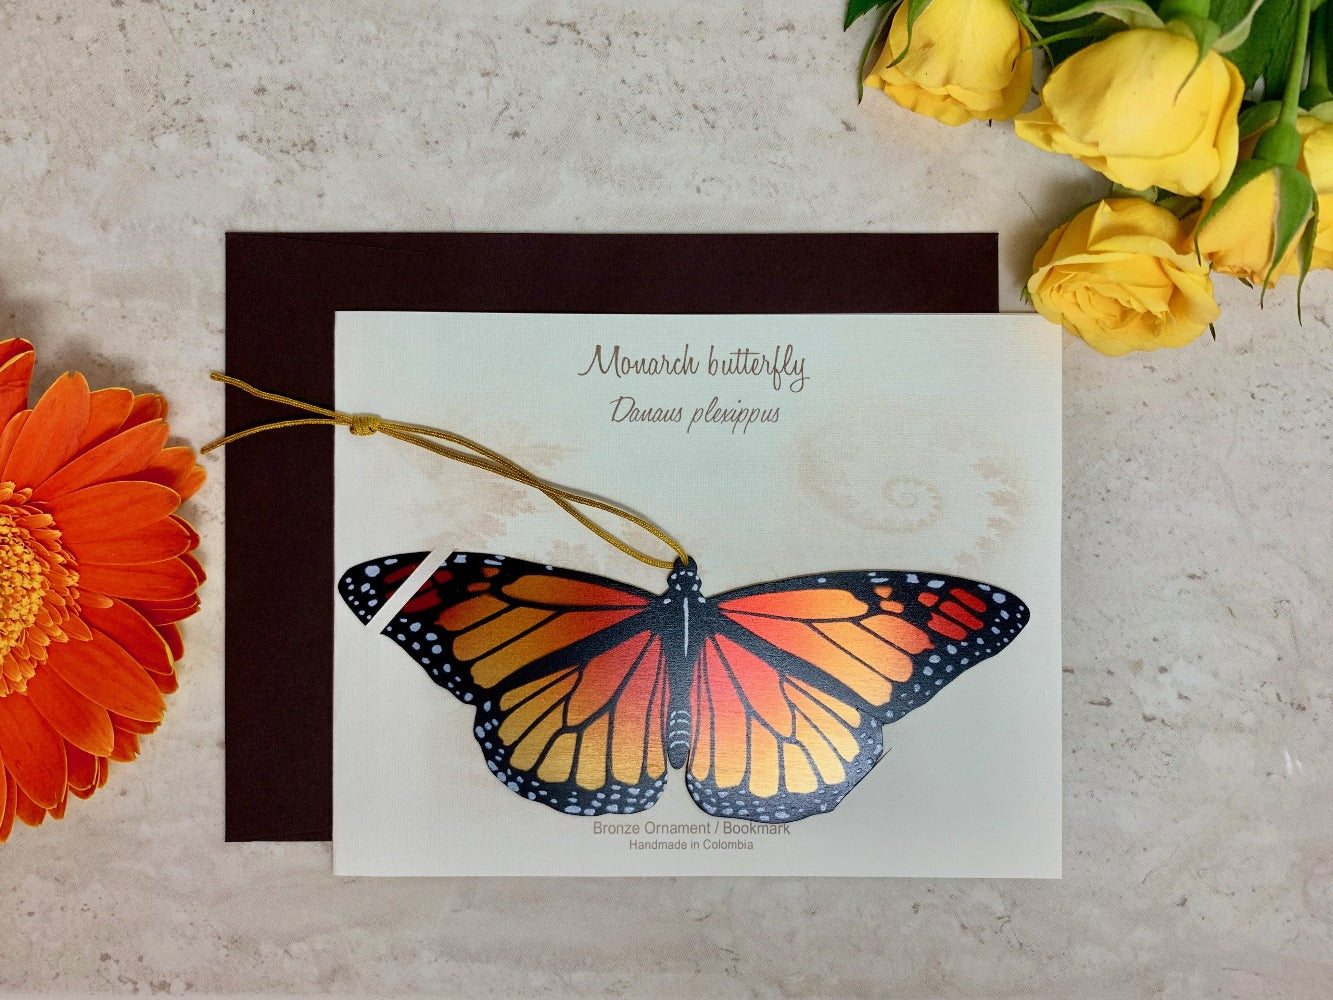 Monarch Butterfly Ornament bronze wholesale  handmade artisan made home decor Notecard Thank you get well sympathy birthday garden